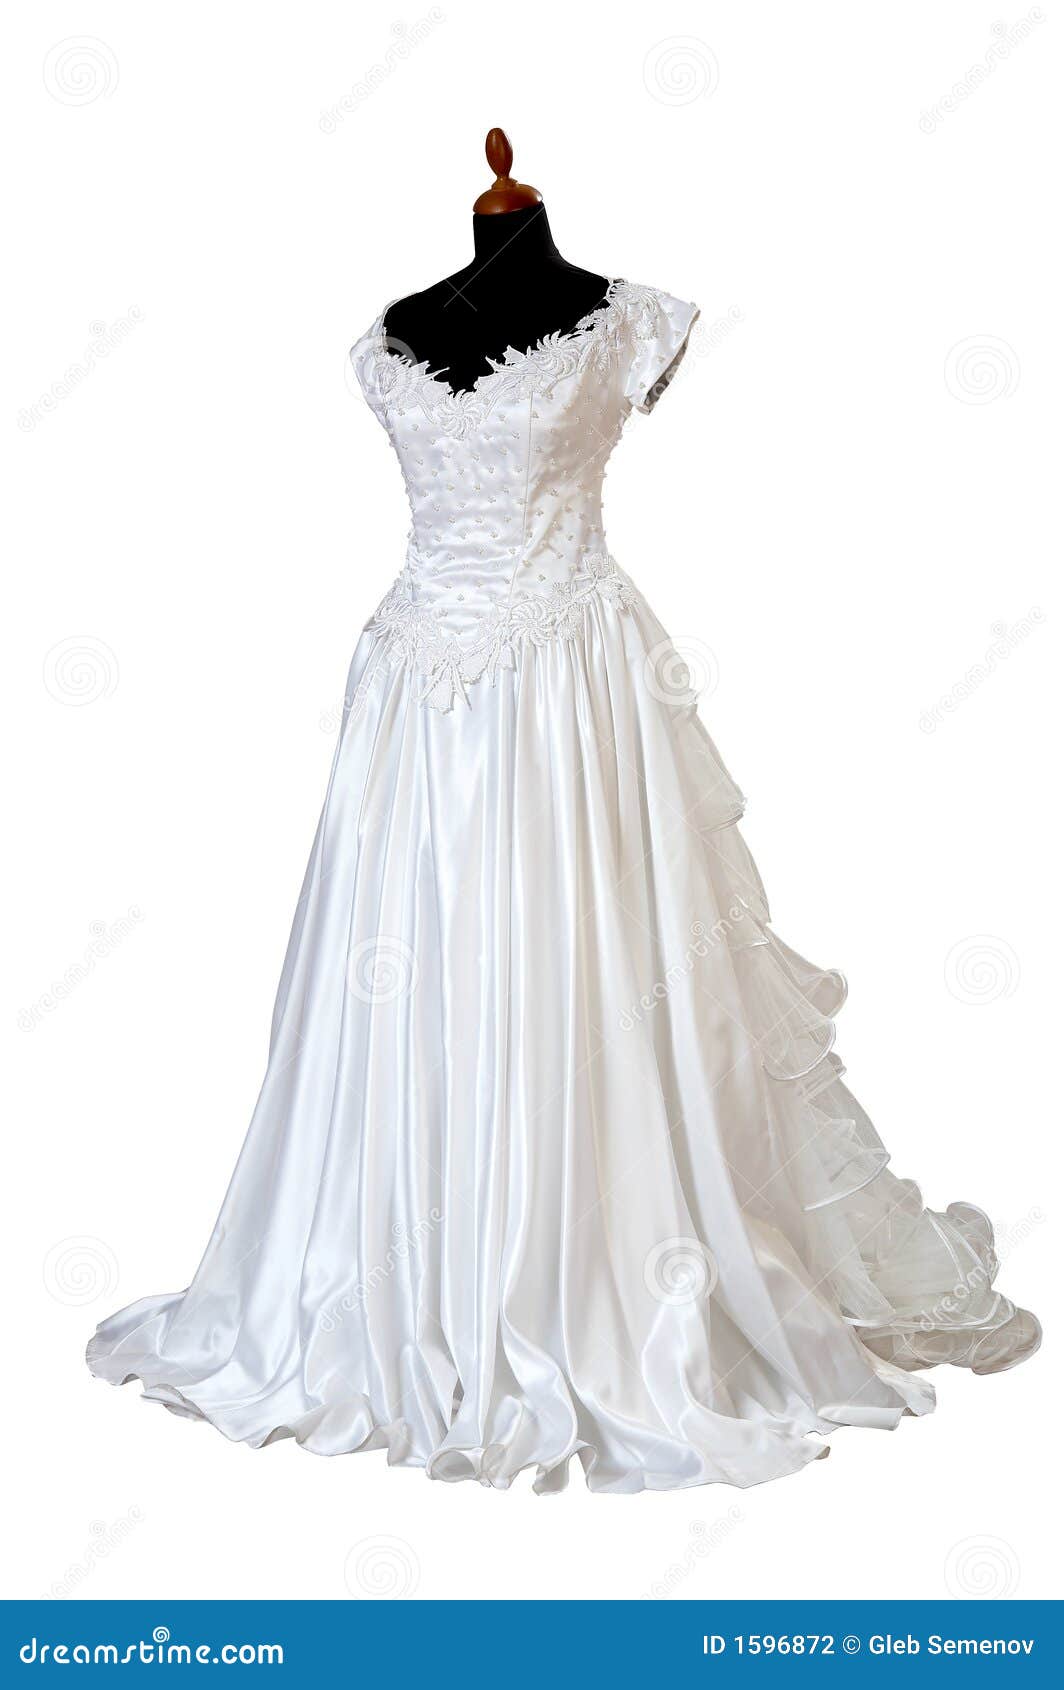 weddings dress